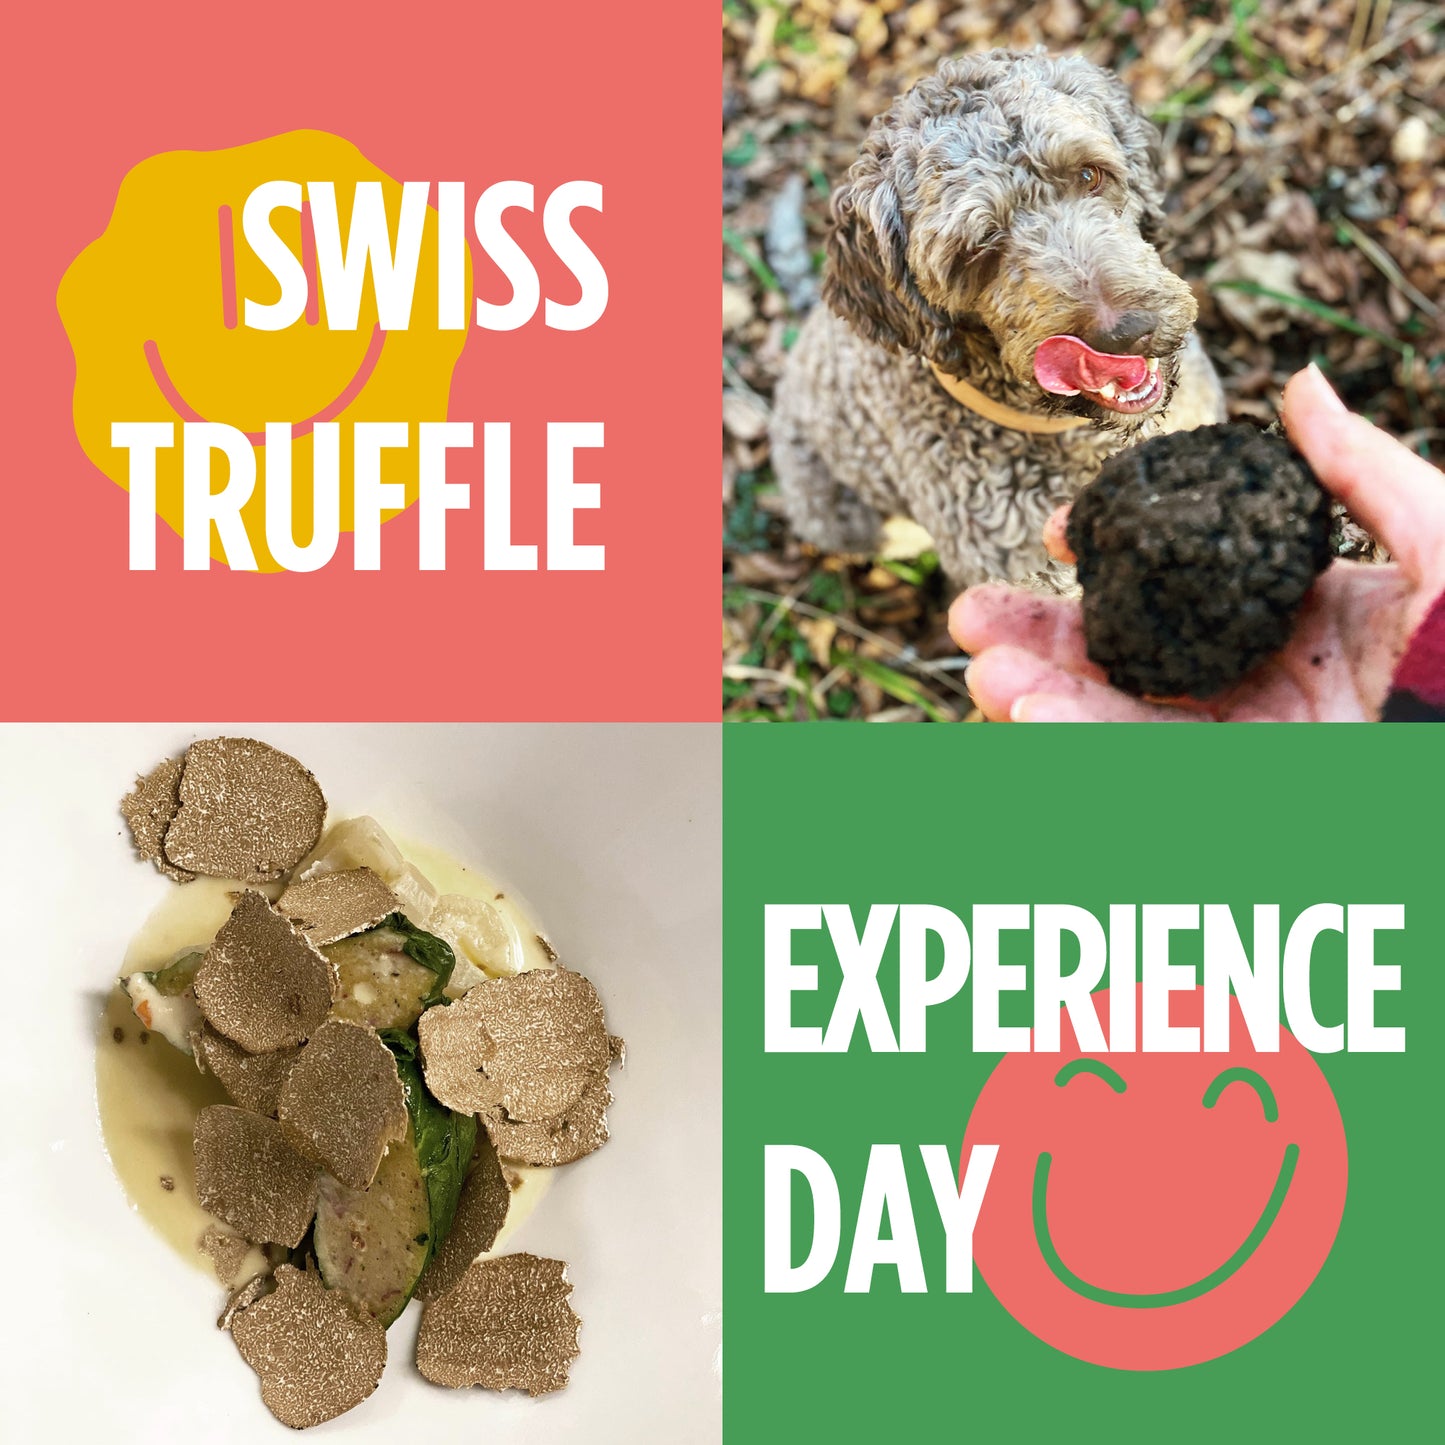 2 / Swiss Truffle Experience Day